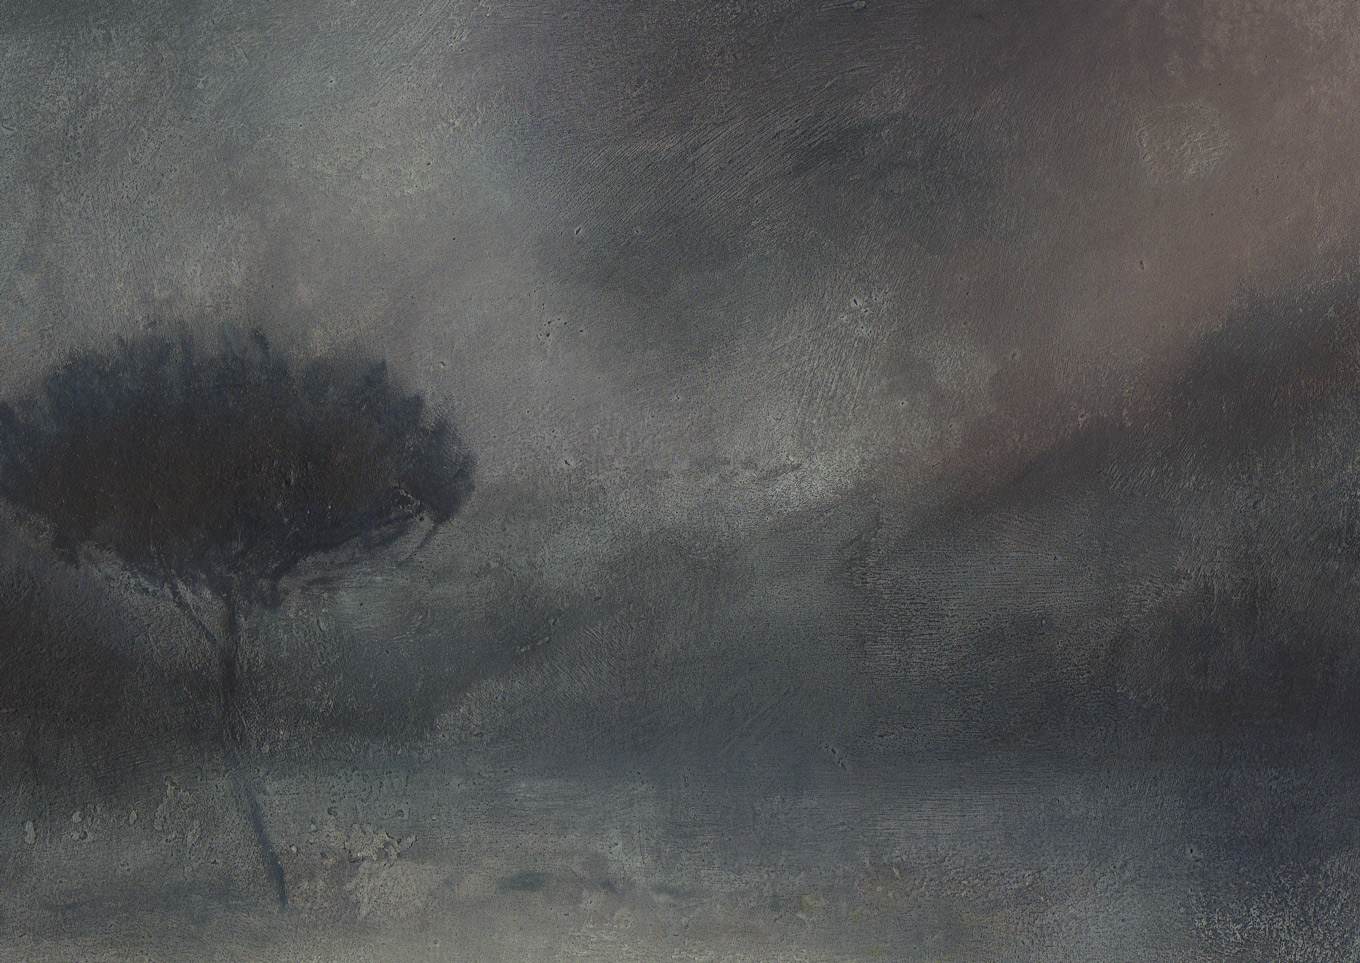 Nicholas Herbert, British Artist - Landscape L928, Lake Garda Series, Tree on the Beach at Limone, contemporary mixed media painting